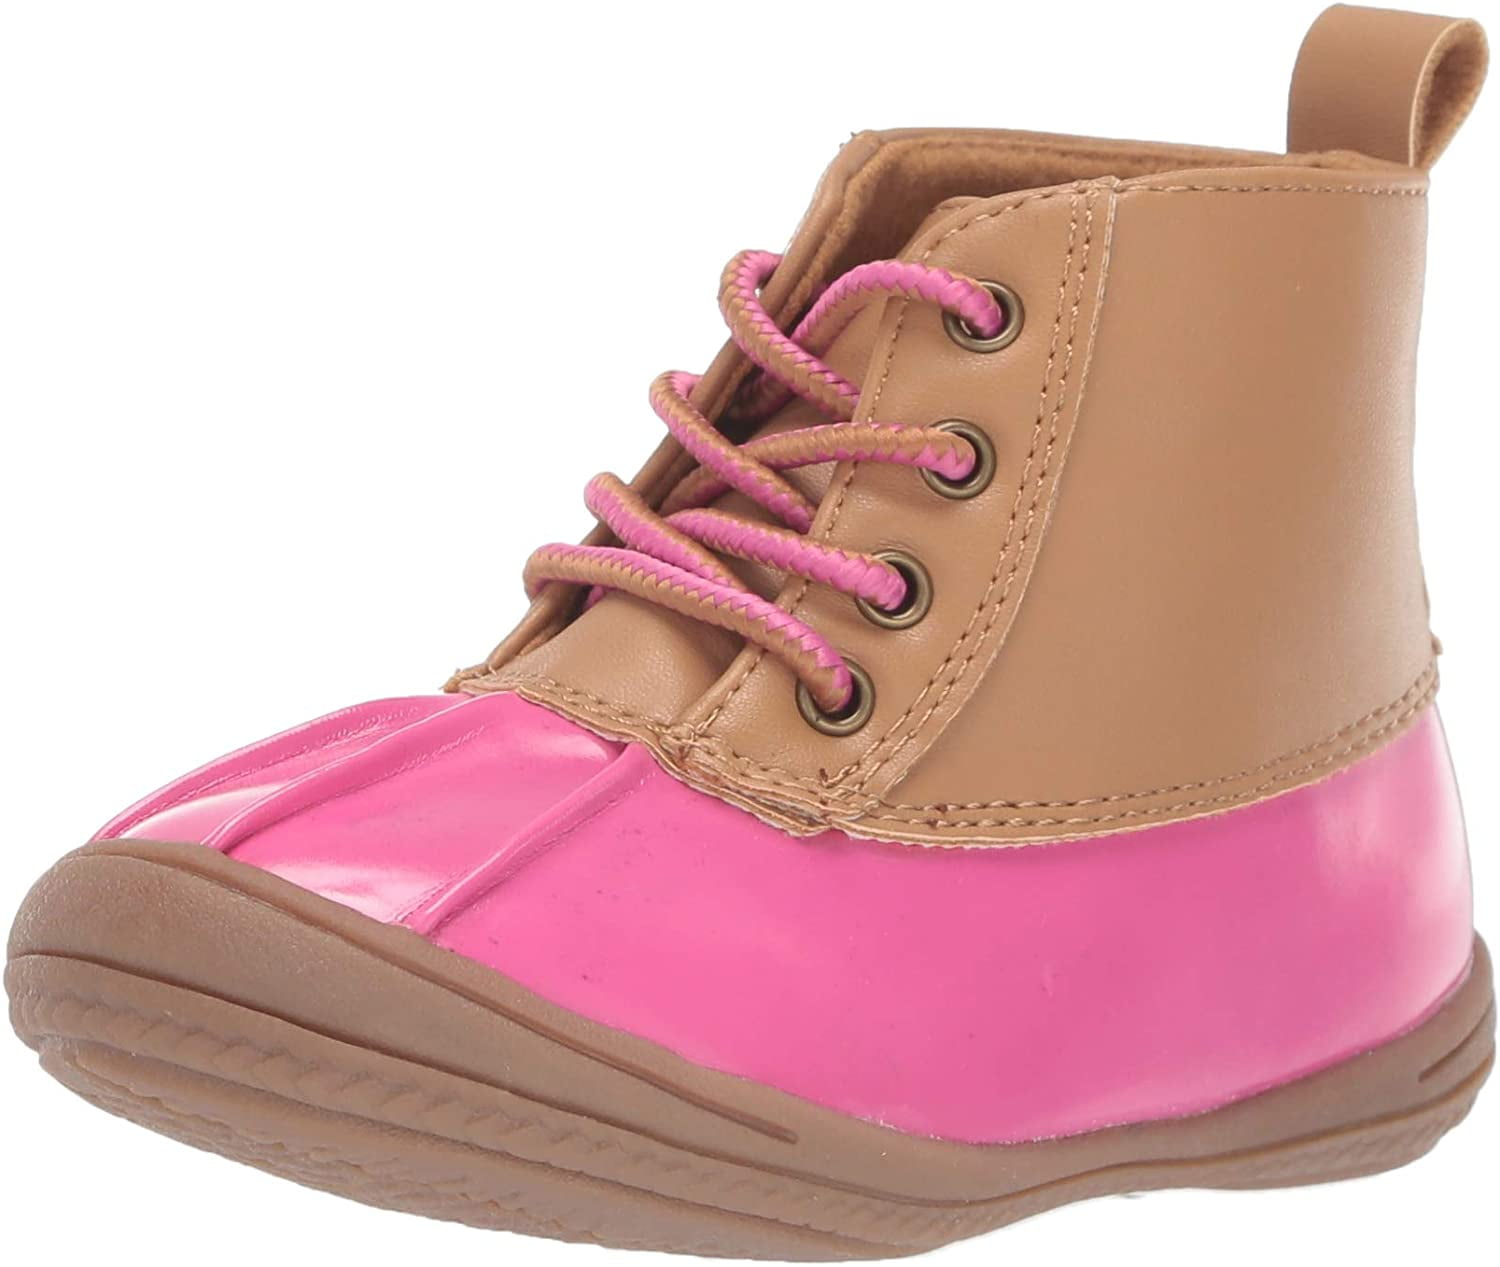 Details about   Biker Fashion 4 Colors Kids Girls Shoes Chelsea Ankle Boots Western Pumps New D 